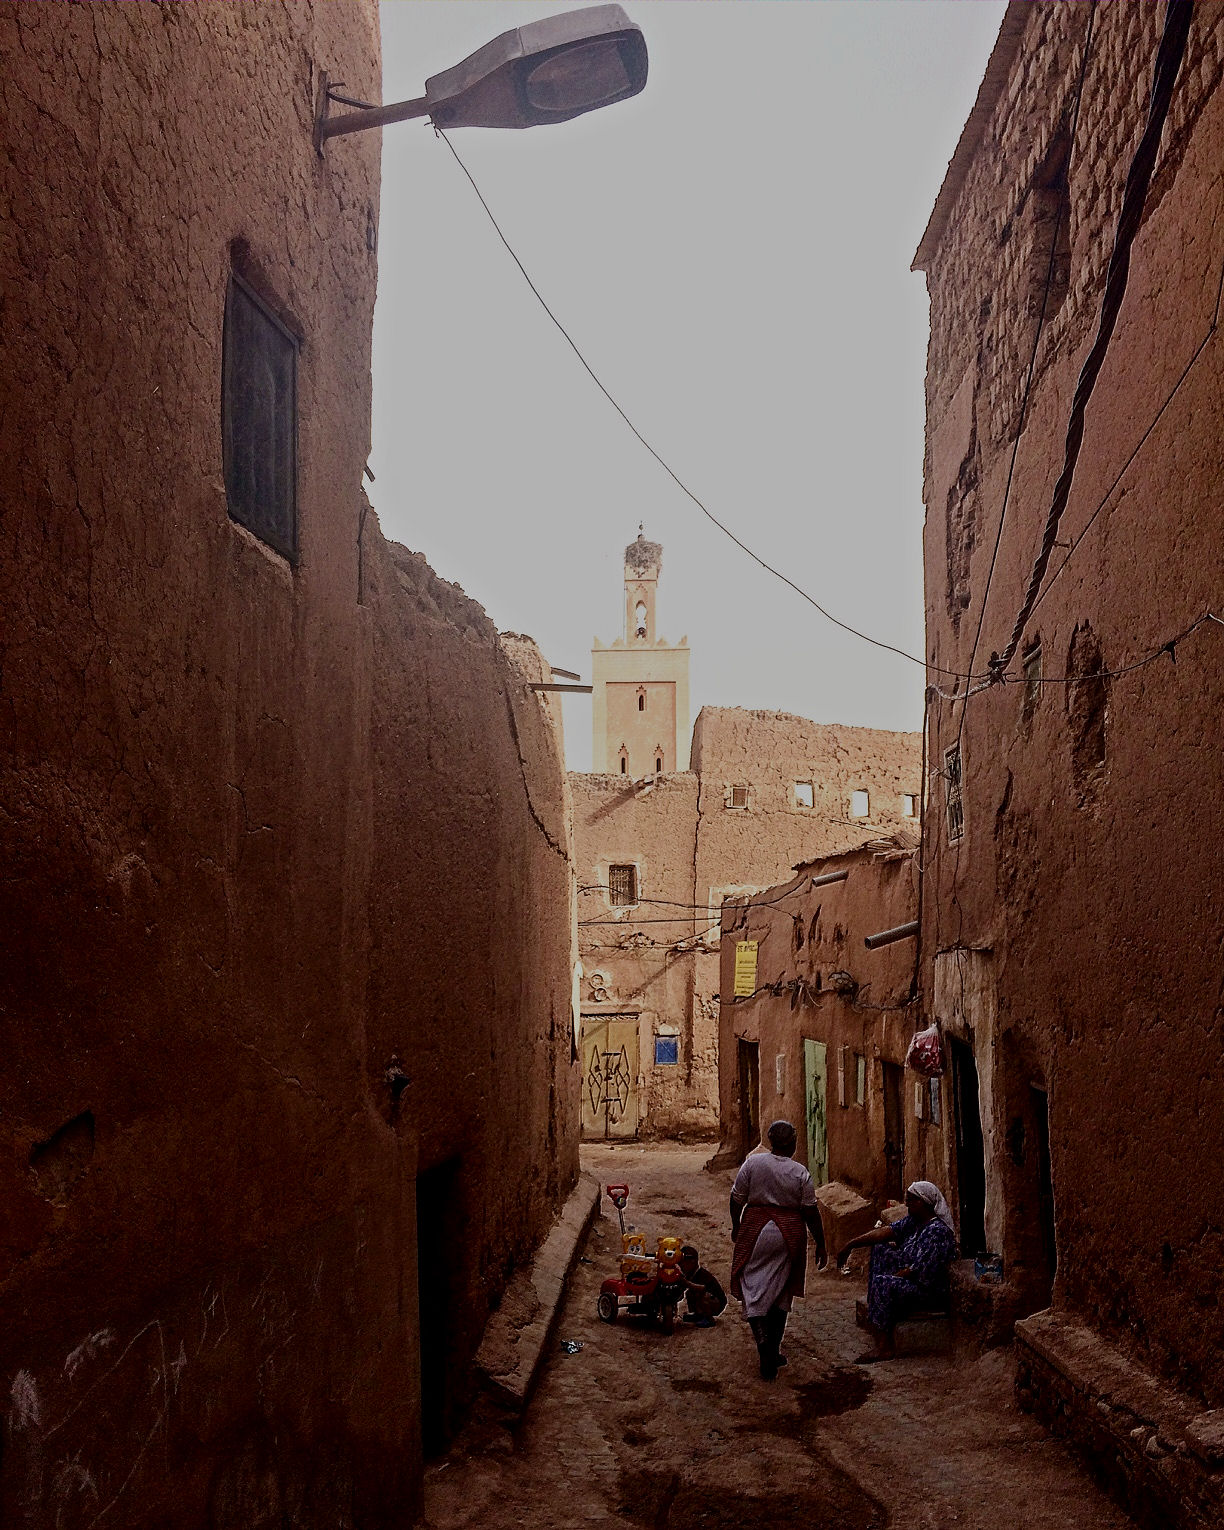 Ouarzazate ksar